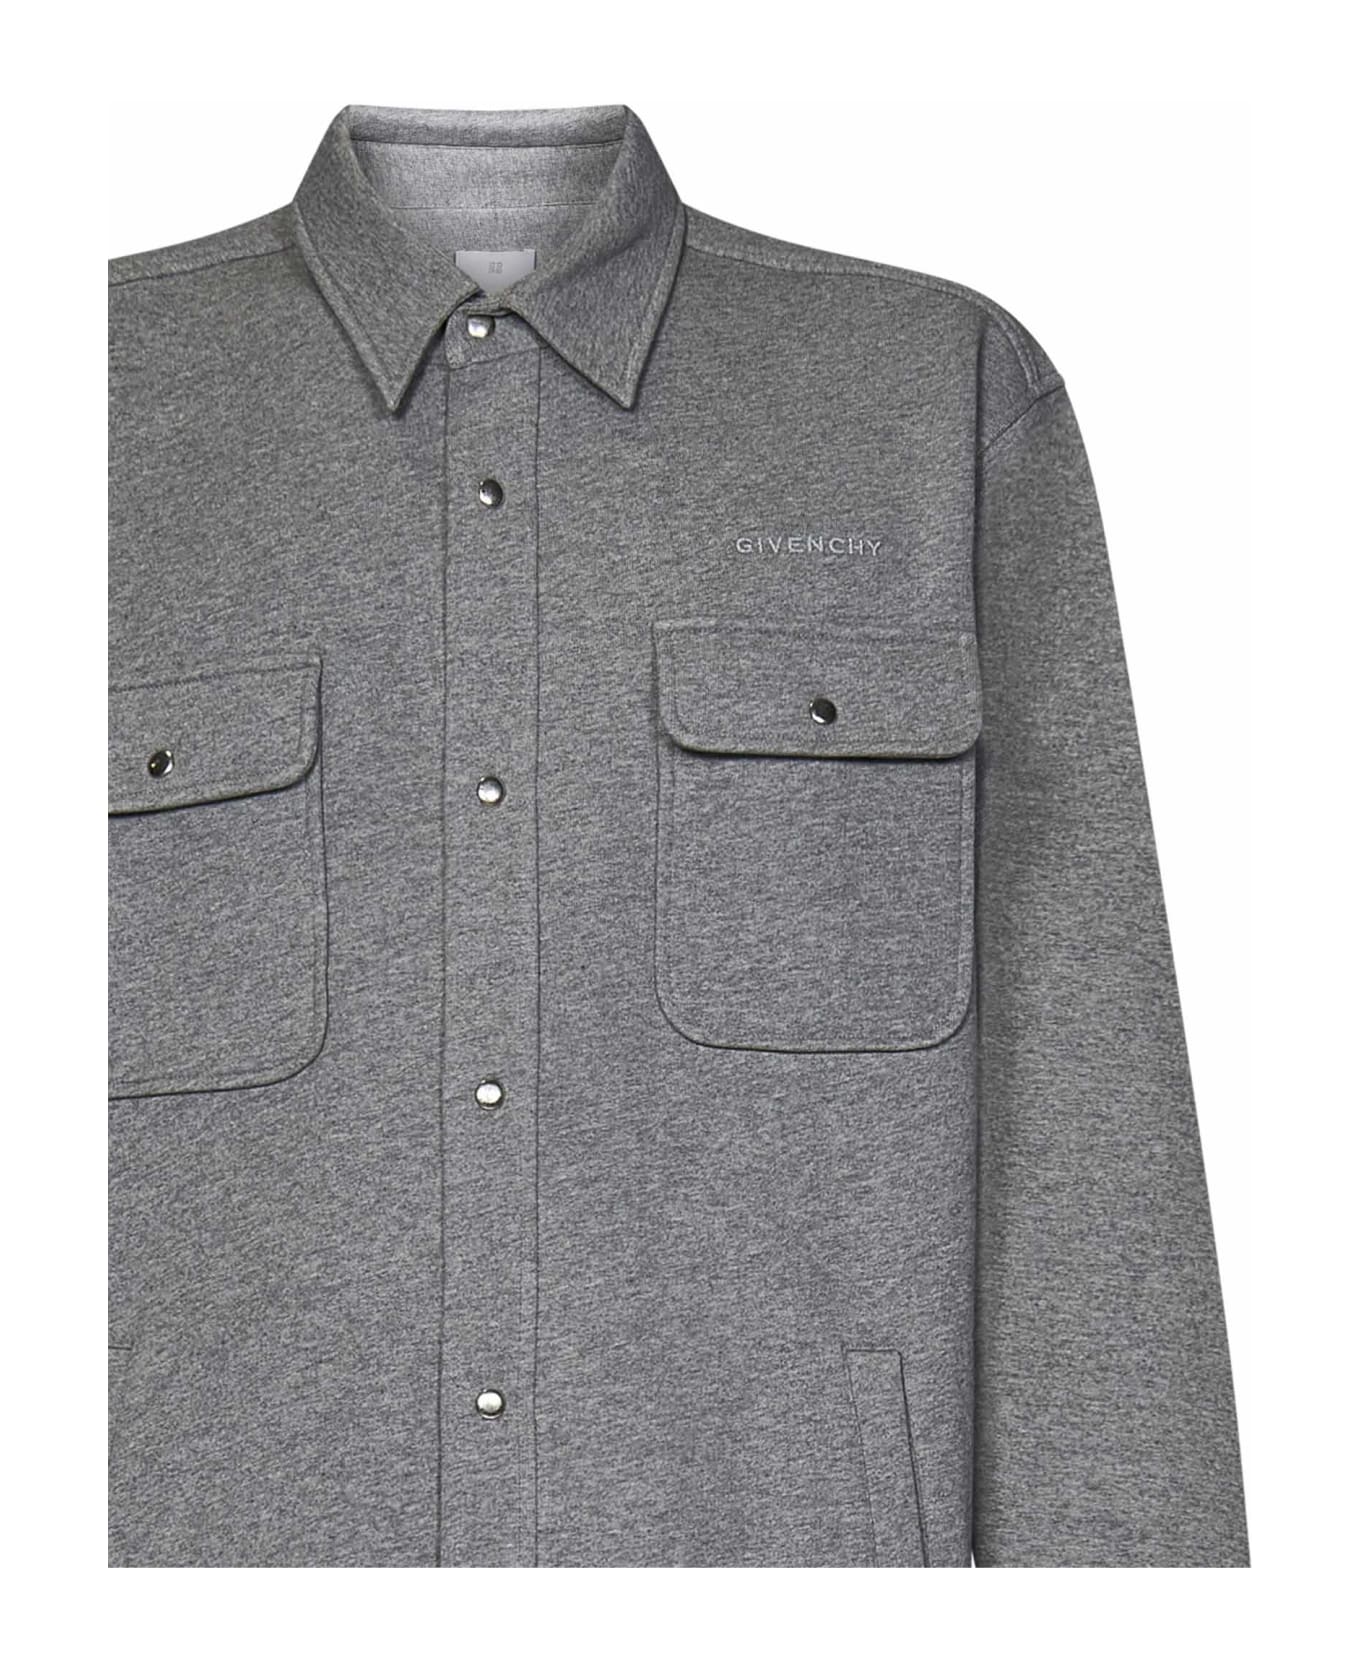 Givenchy Patch Pockets Shirt - Grey